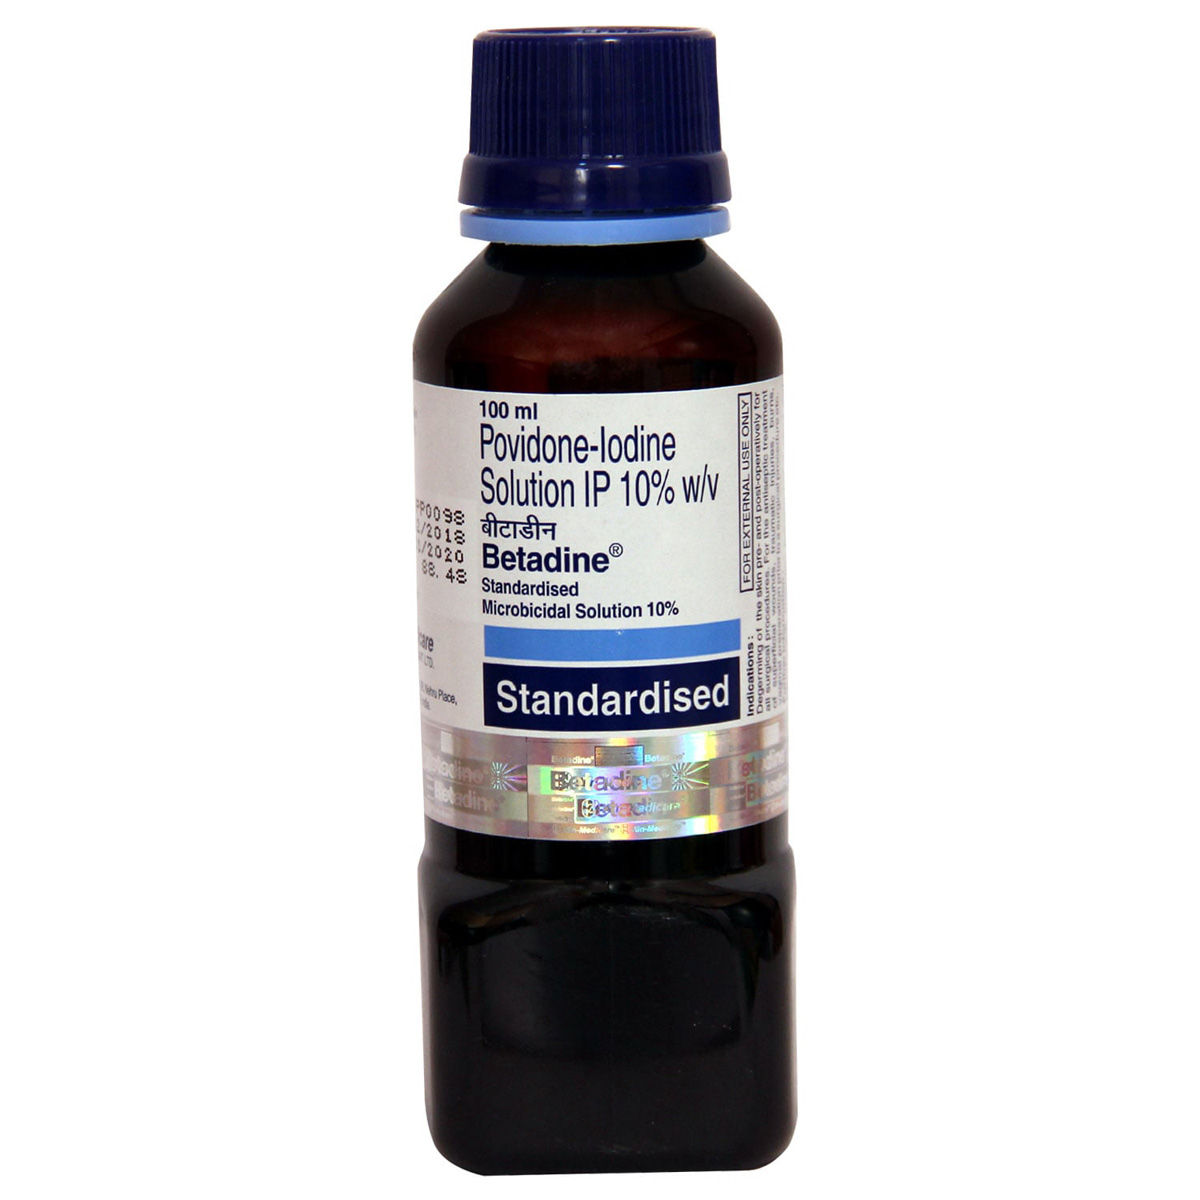 Bezem Afslachten Vulkanisch Betadine 10% Solution 100 ml Price, Uses, Side Effects, Composition -  Apollo Pharmacy